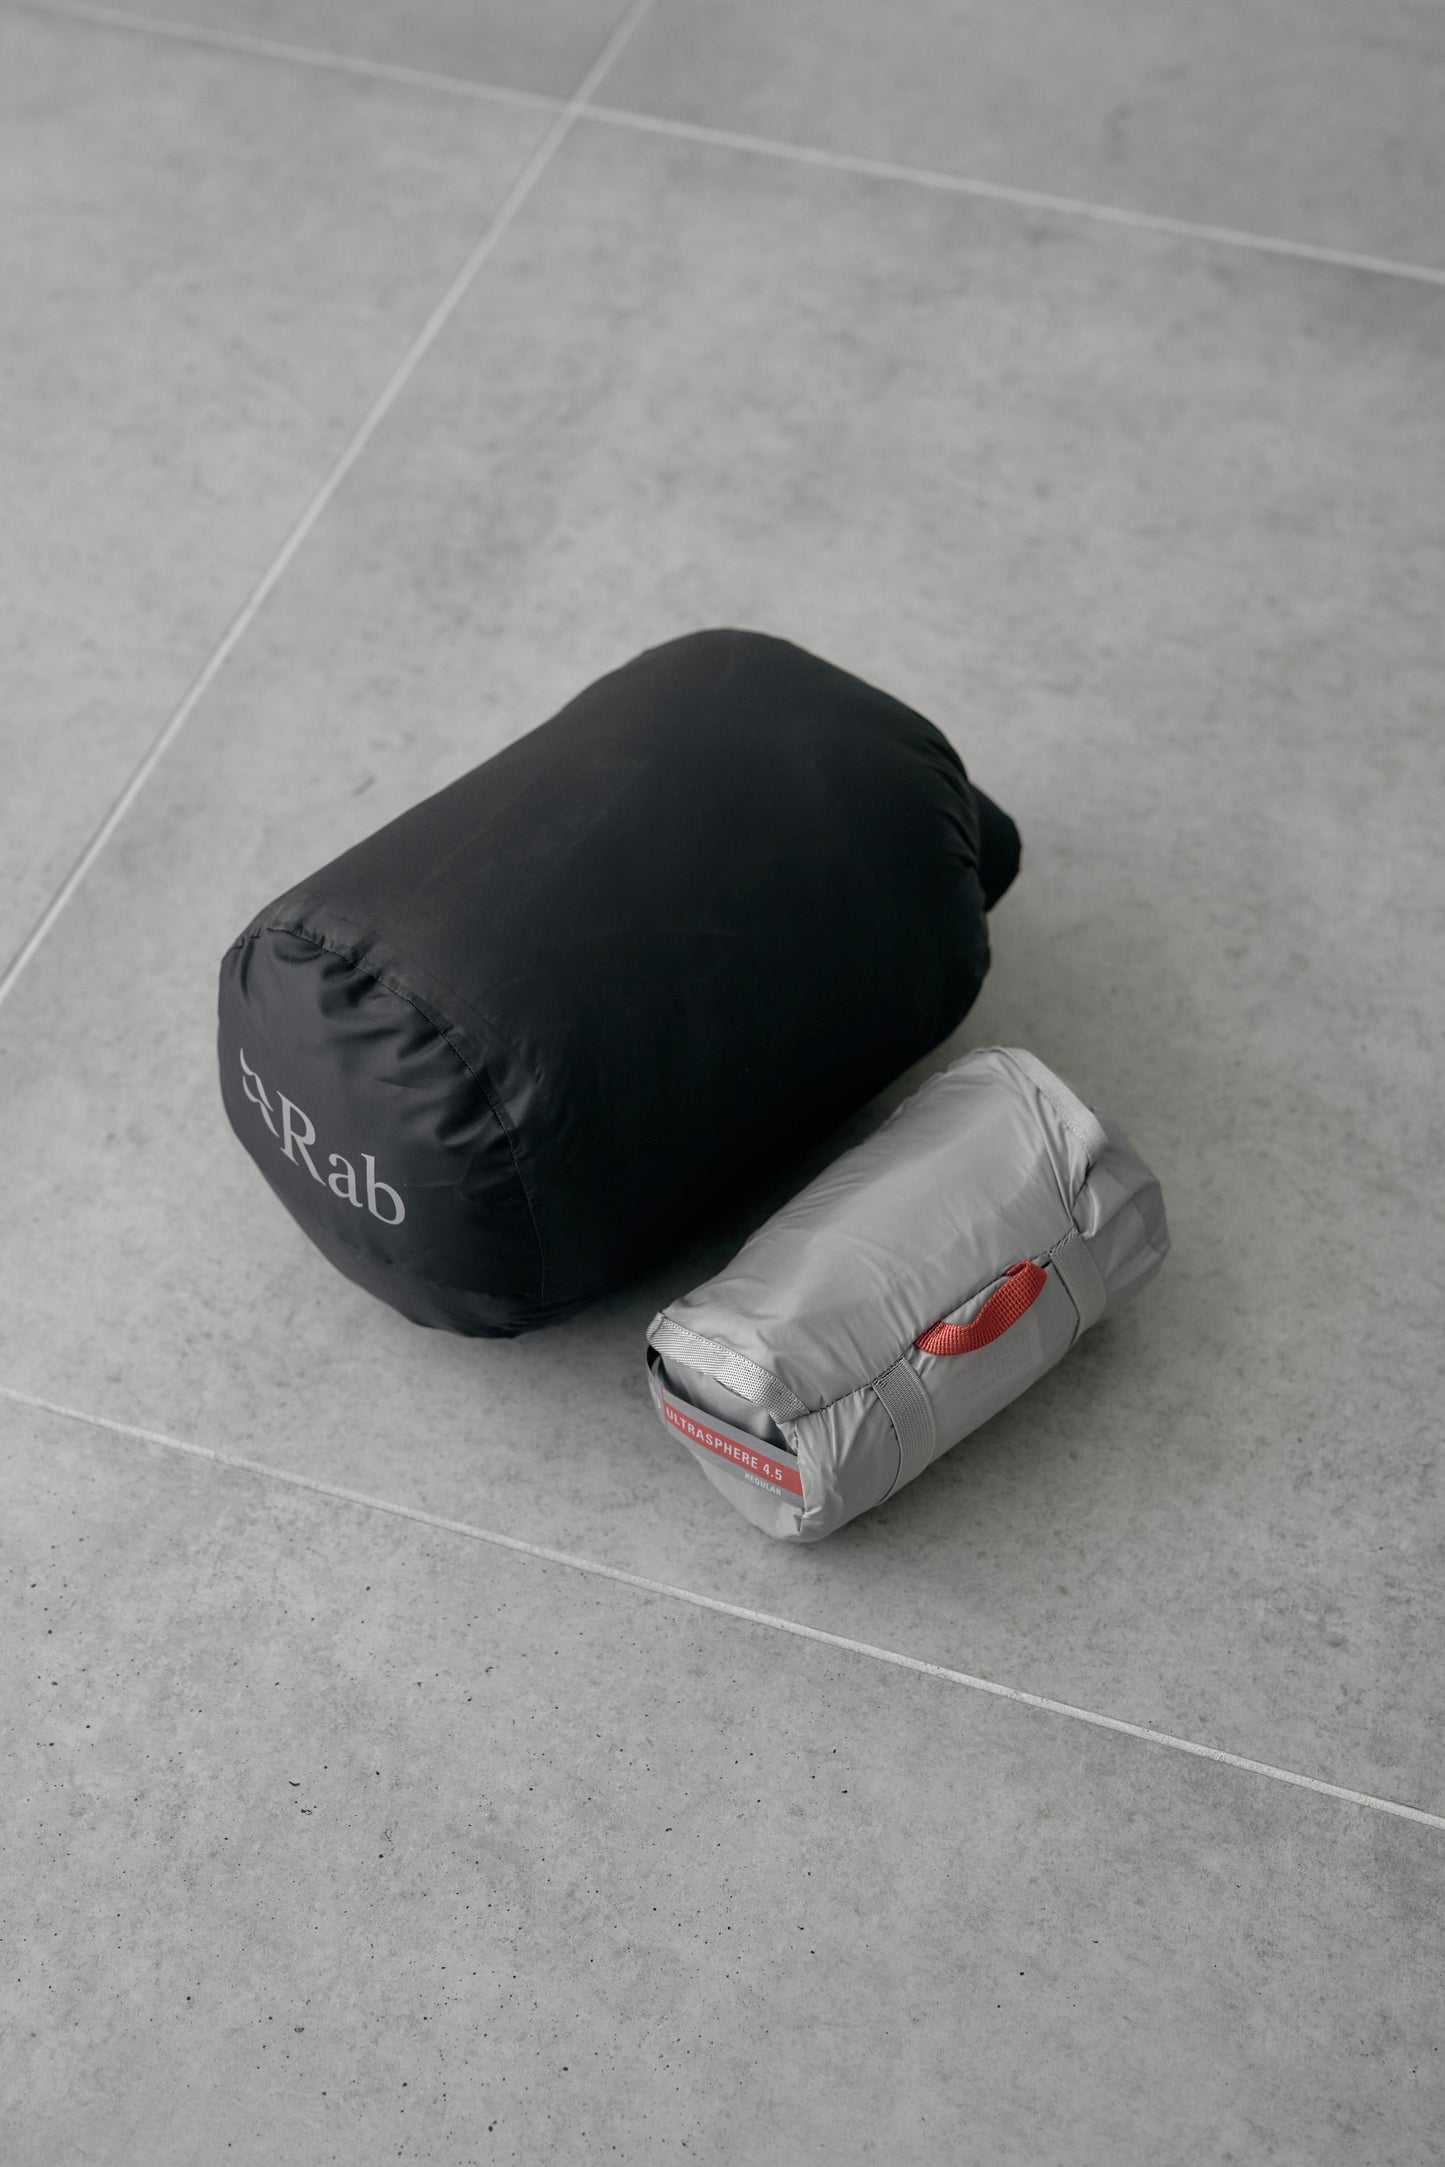 Rab / Mythic Ultra 120 Modular Down Sleeping Bag